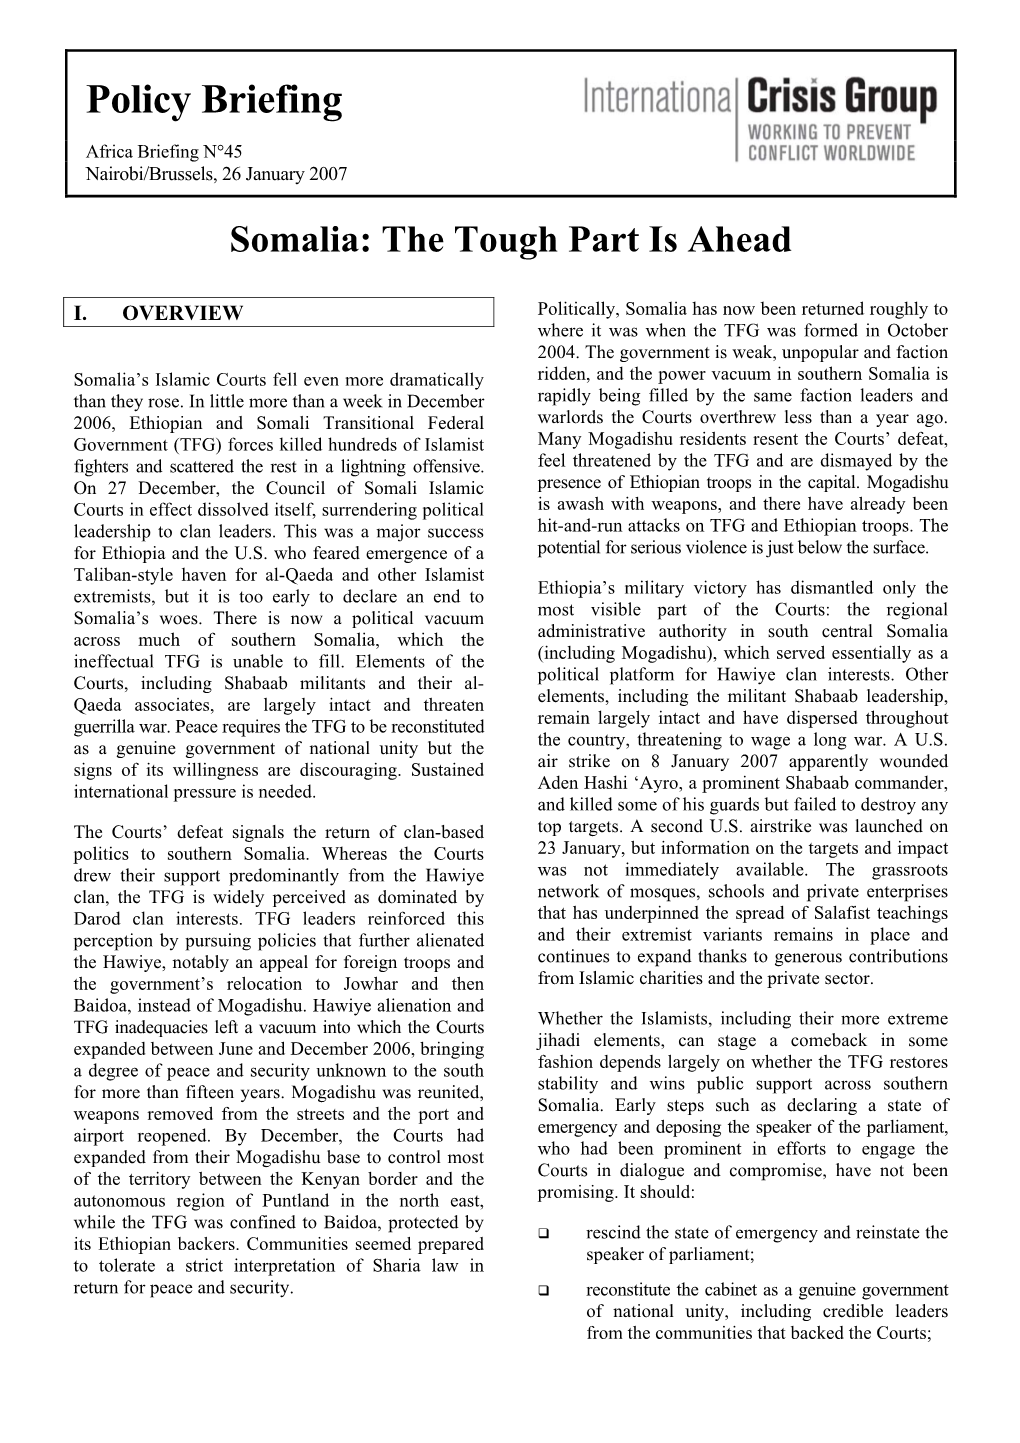 Somalia: the Tough Part Is Ahead